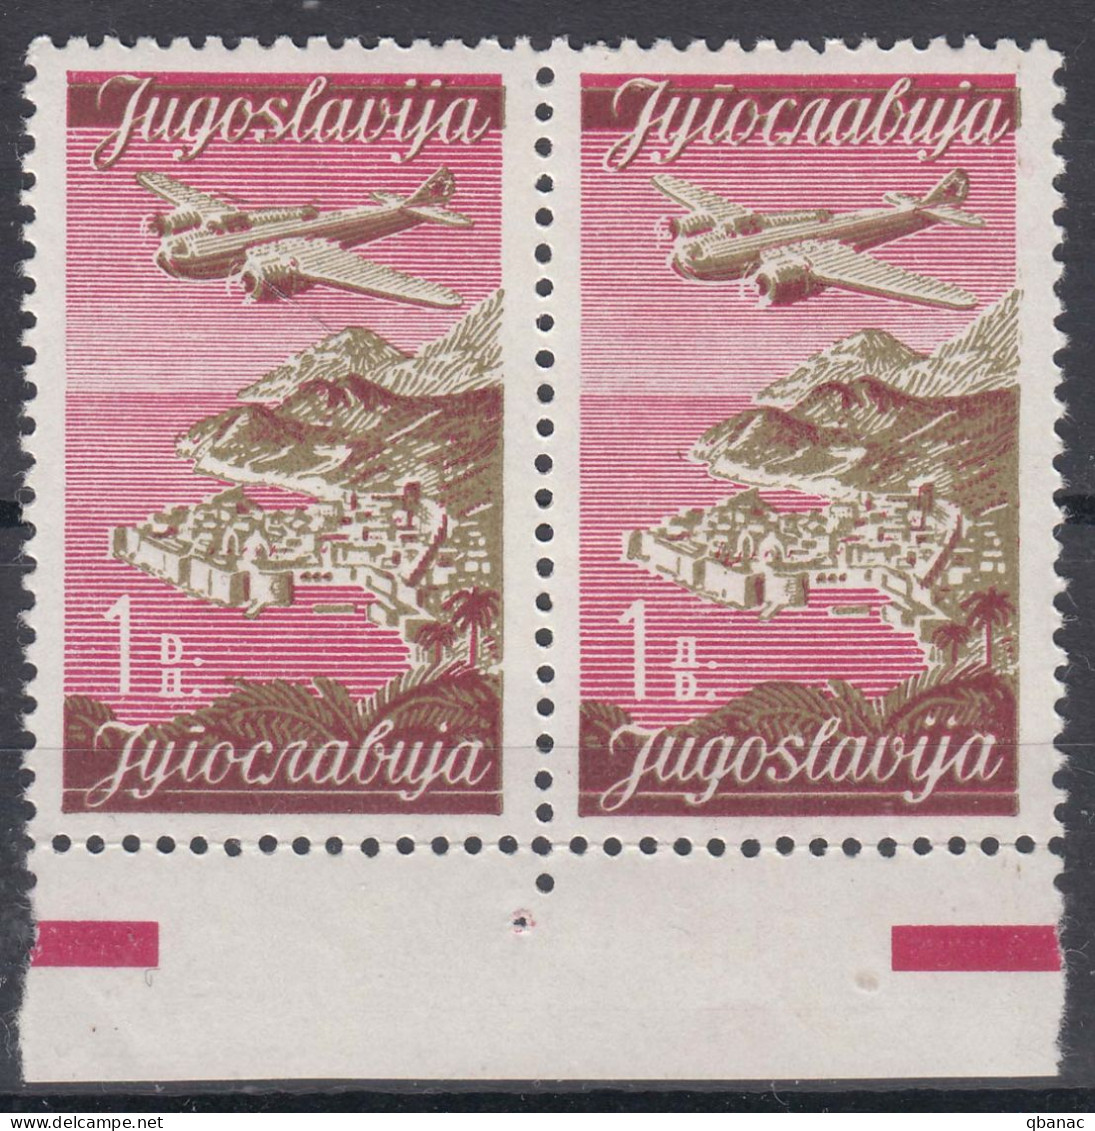 Yugoslavia Republic 1947 Airmail Mi#516 I And II Pair Mint Never Hinged - Neufs